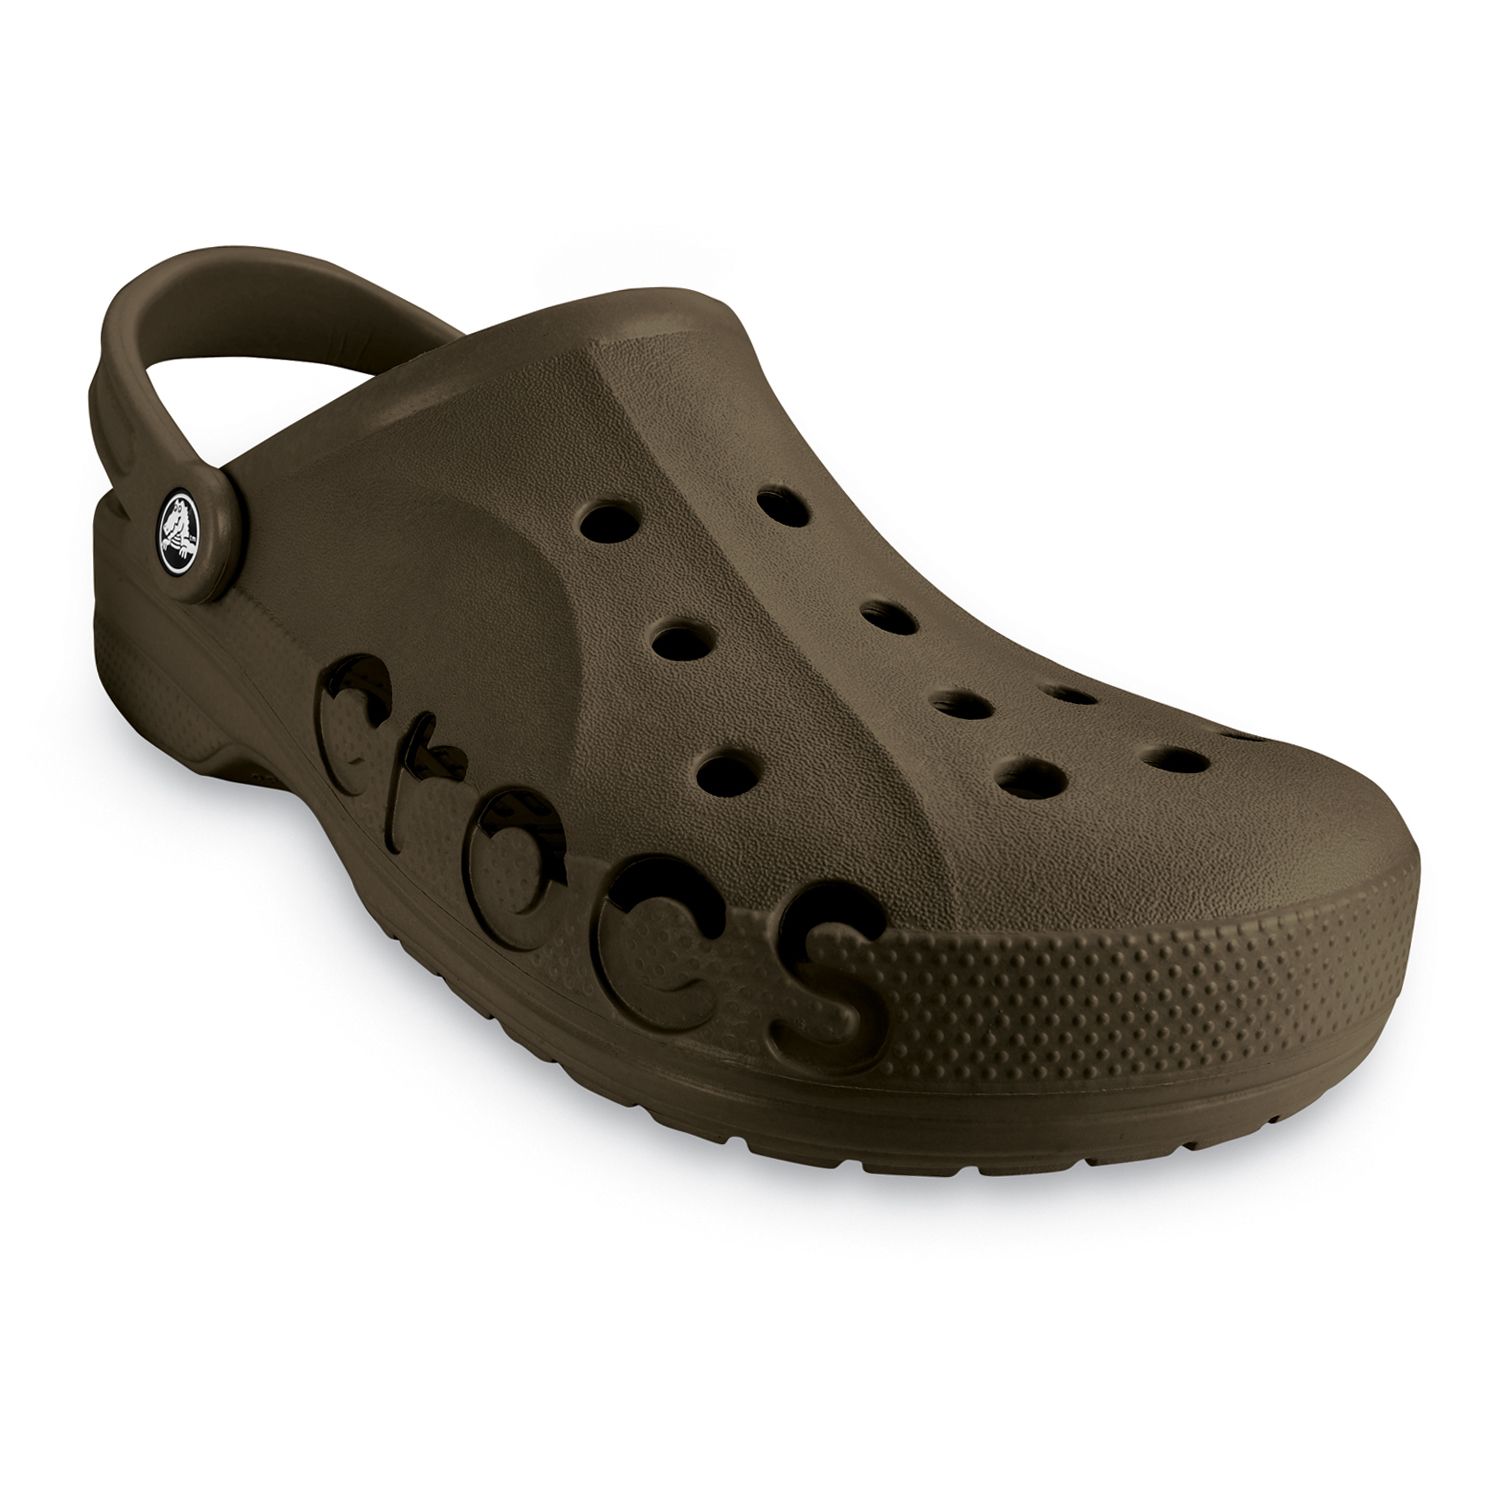 Crocs Baya Men's Clogs